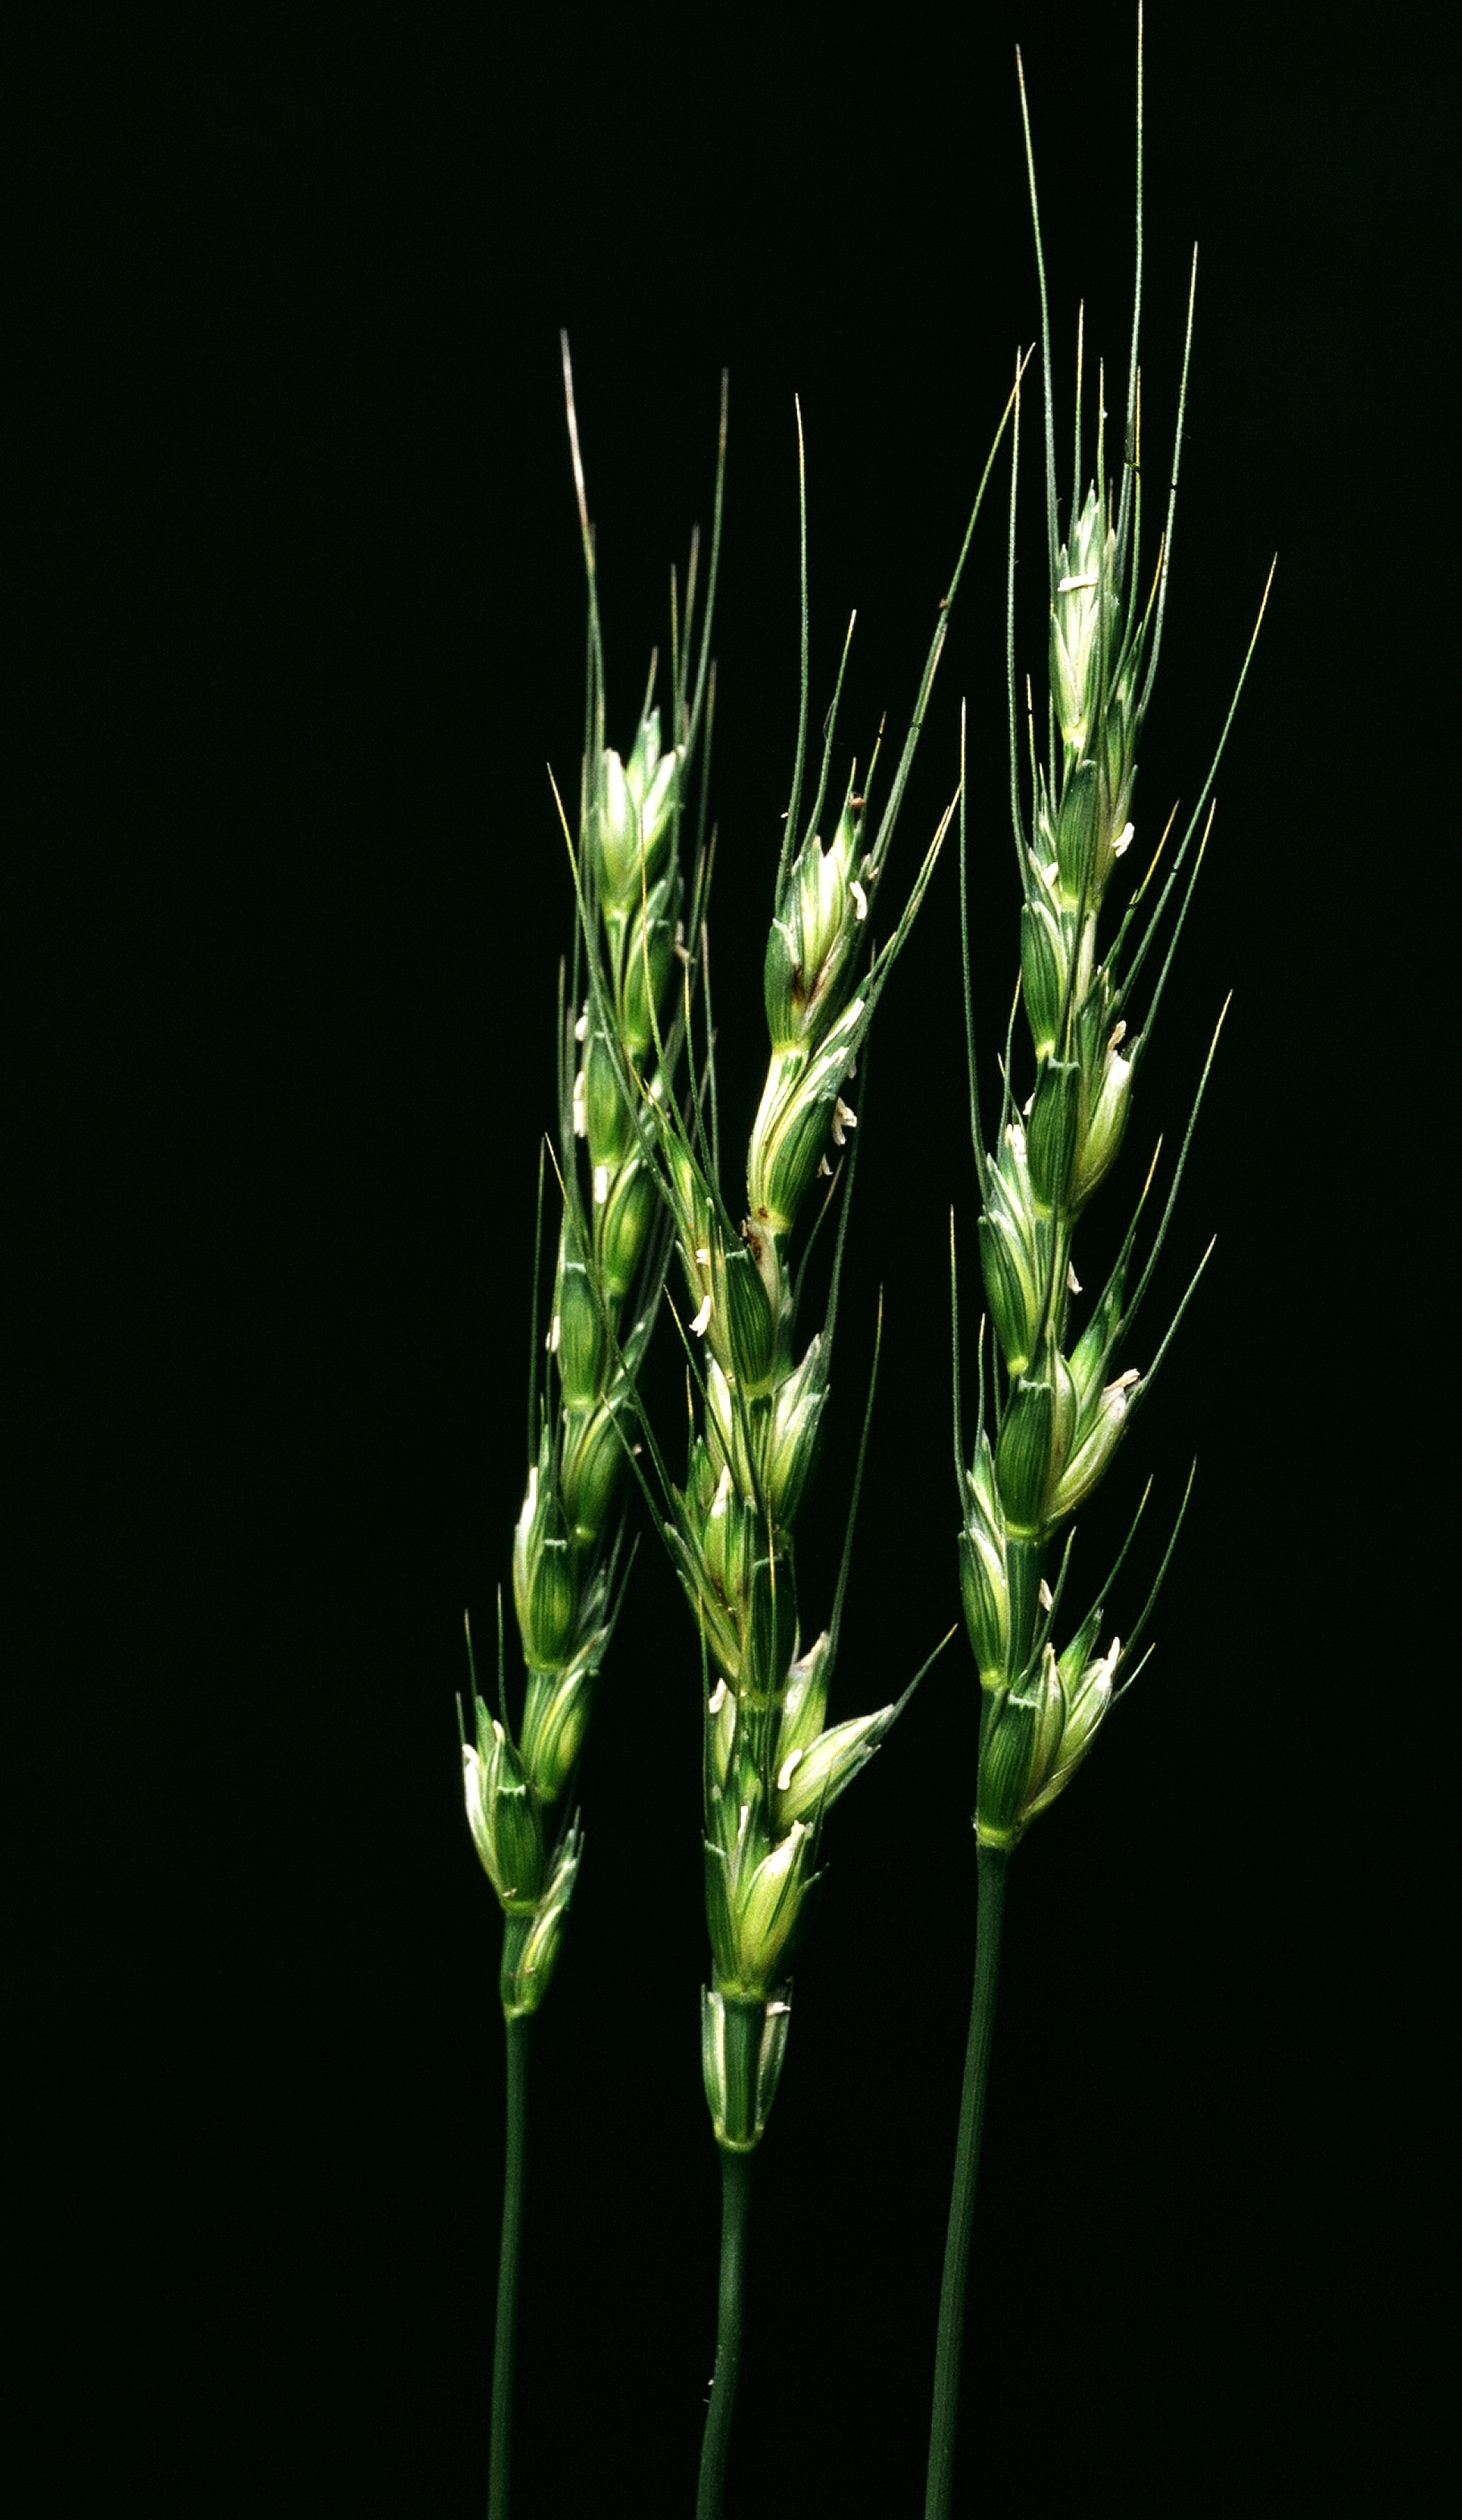 hybrid wheat